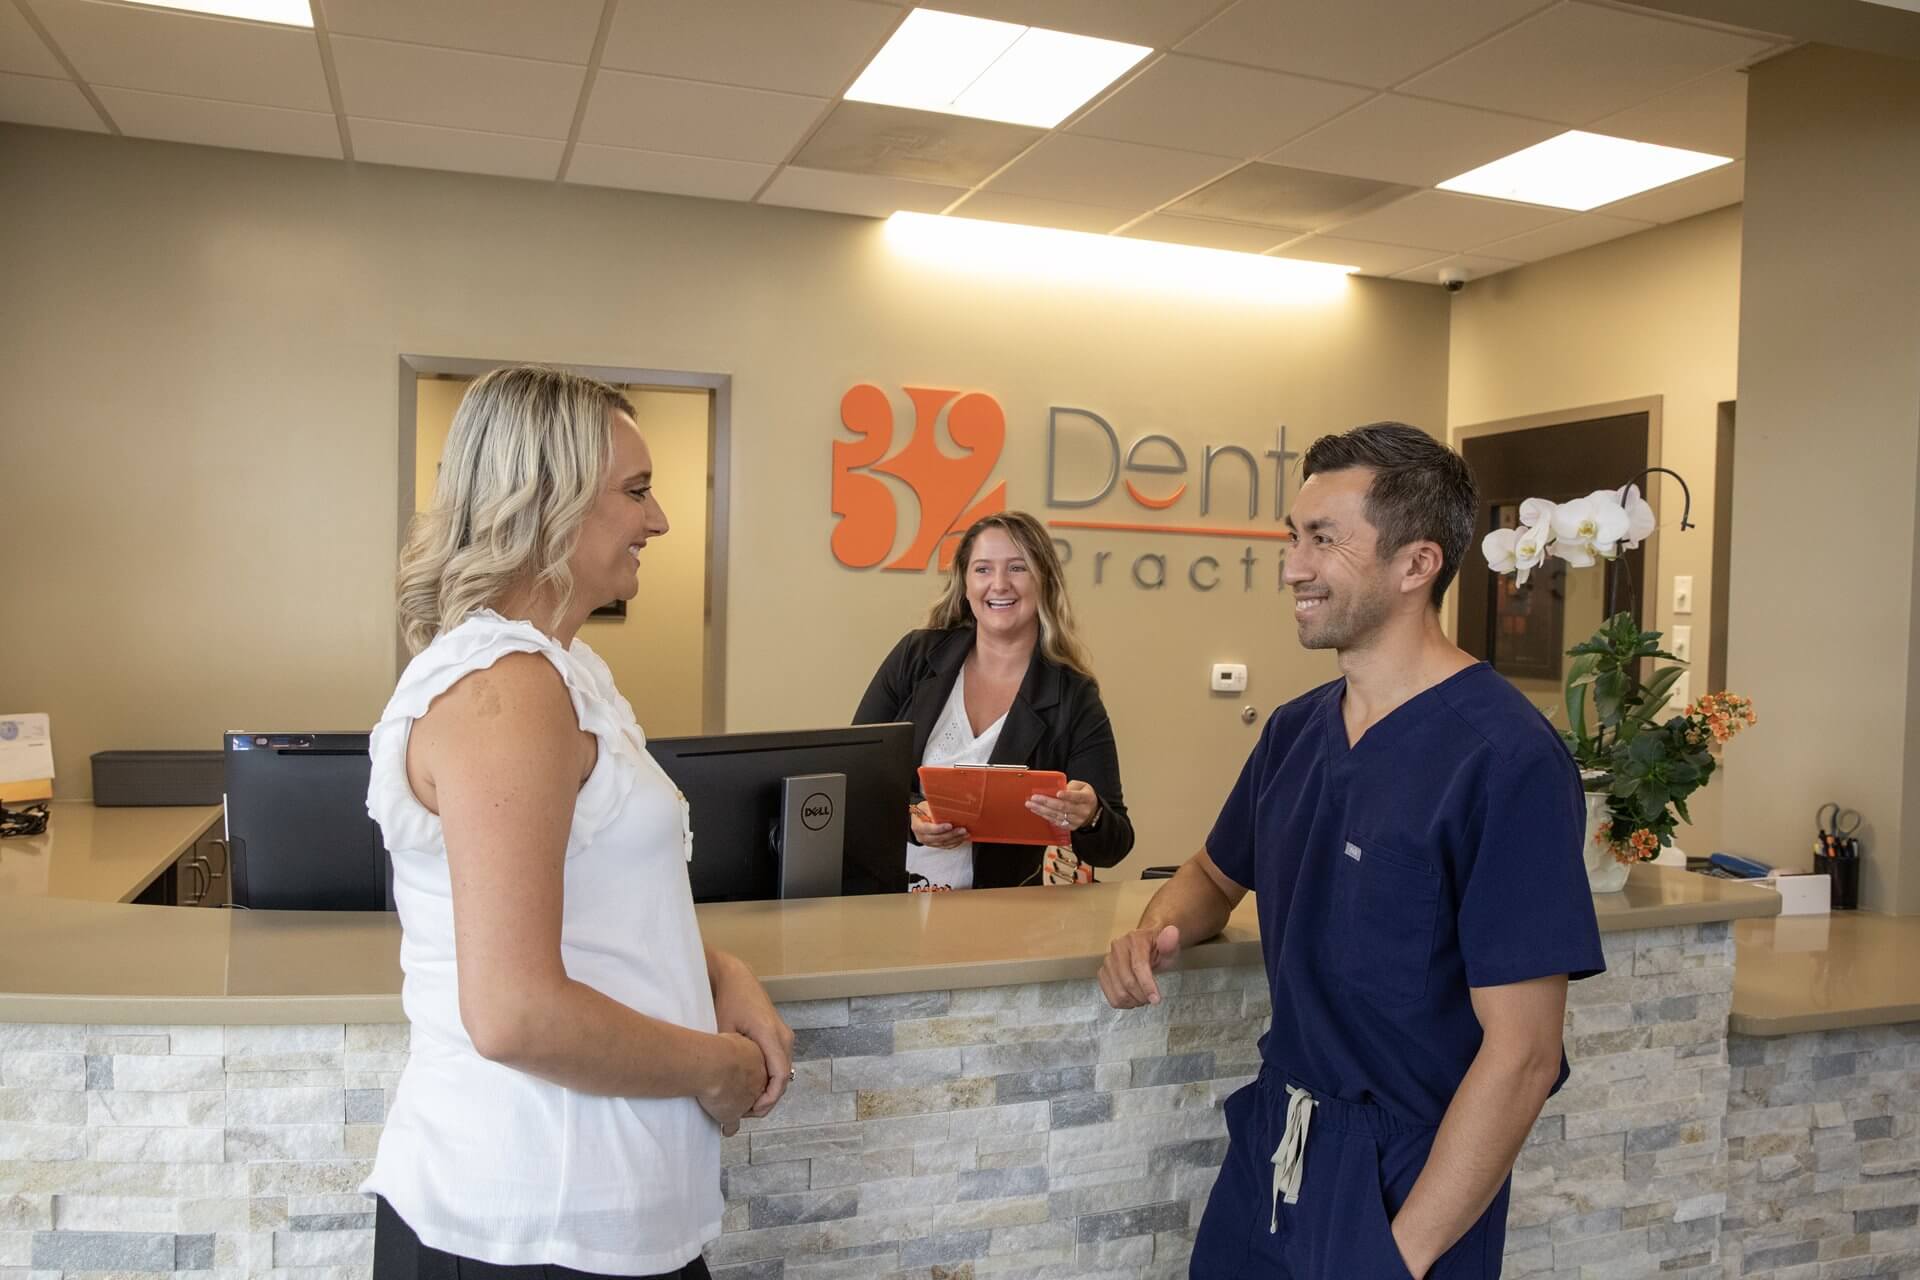 32 Dental Practice-Dentist Kennesaw (2)